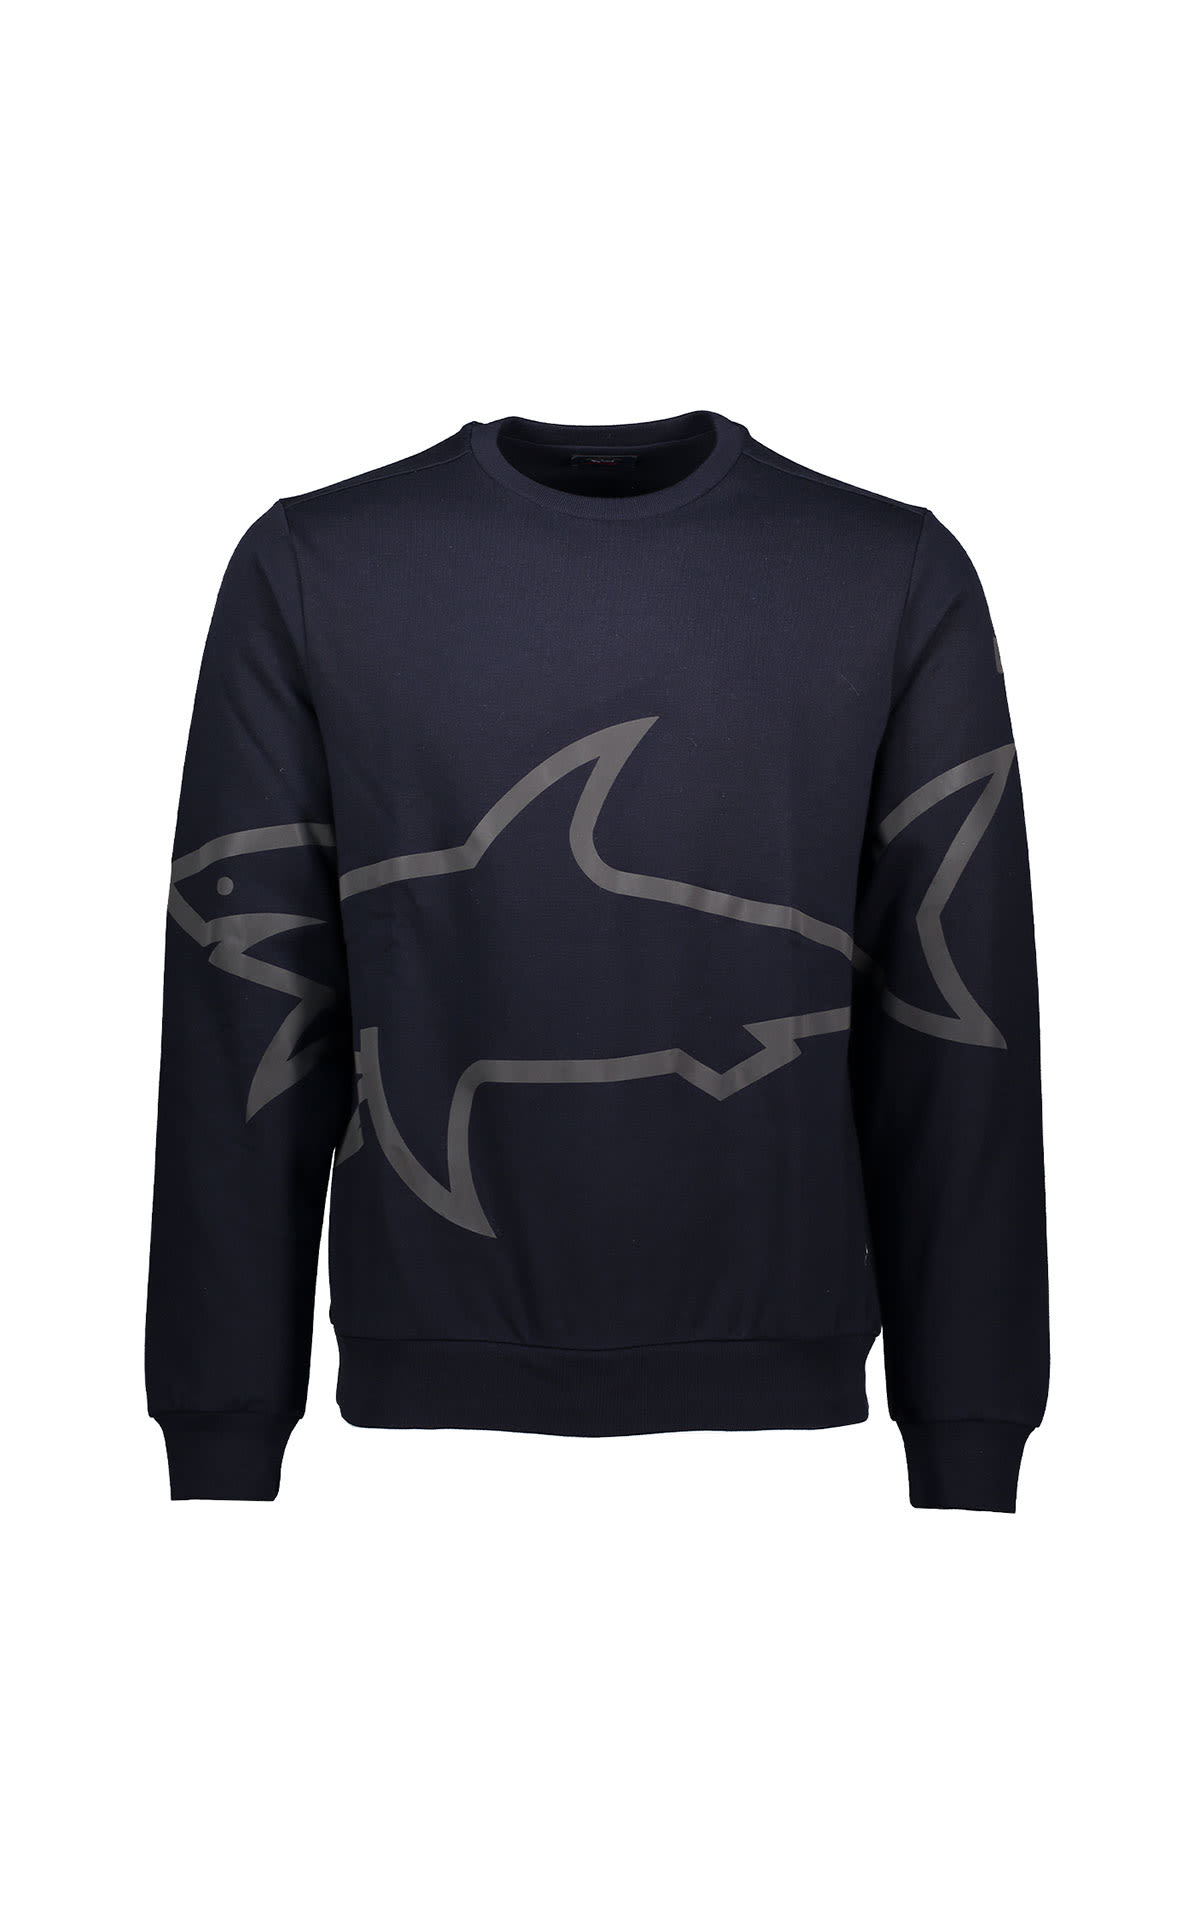 Black sweatshirt with Paul & Shark shark